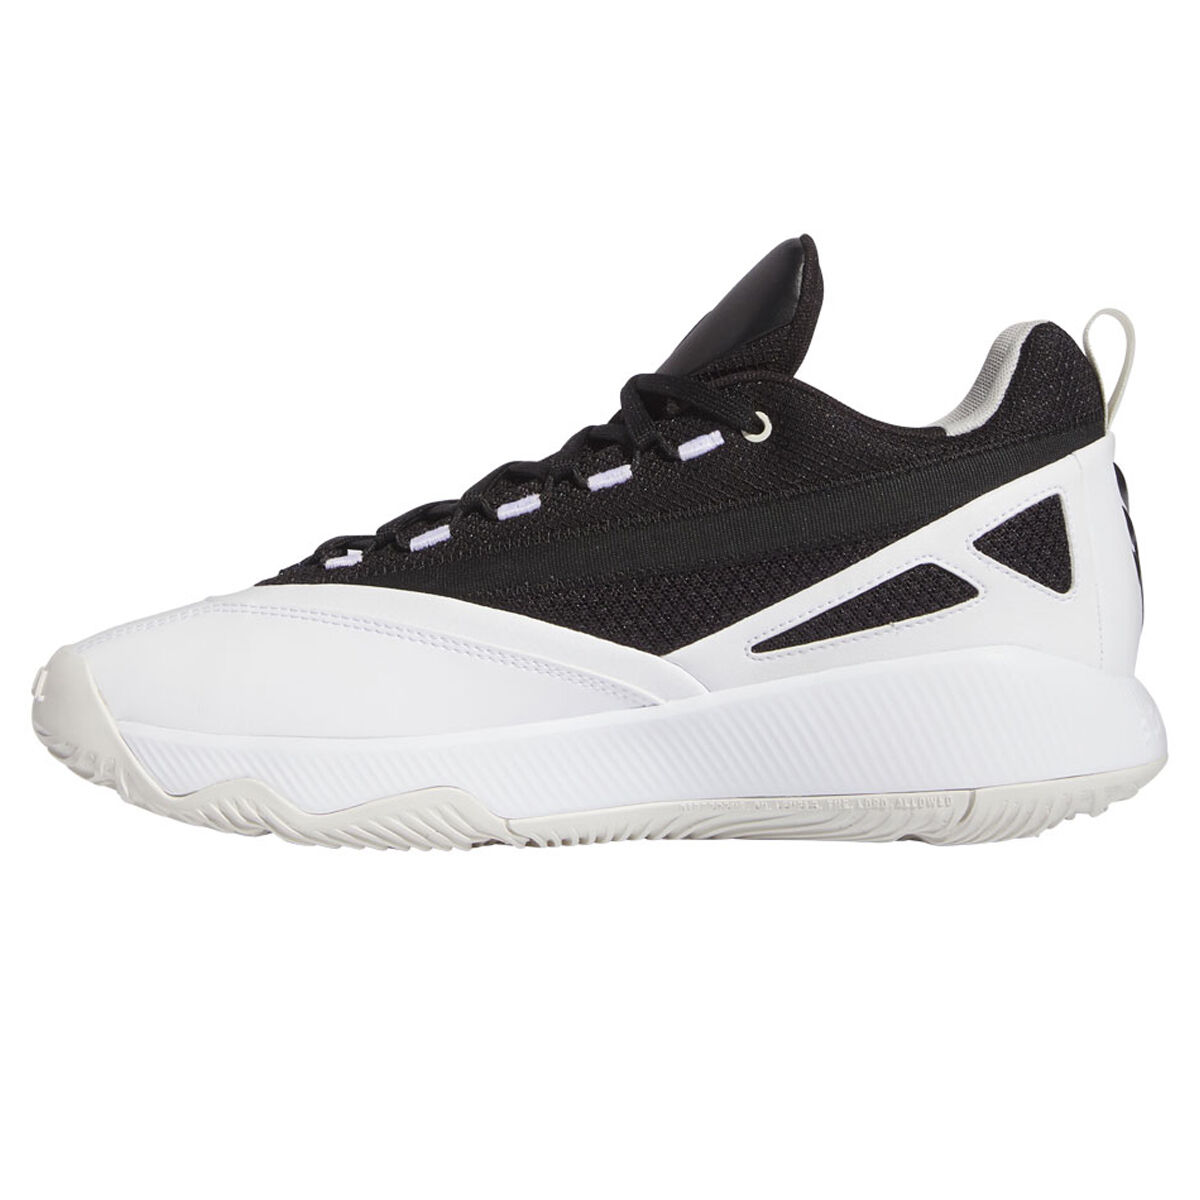 adidas Dame Certified 2 Basketball Shoes White/Black US Mens 7 / Womens 8, White/Black, rebel_hi-res